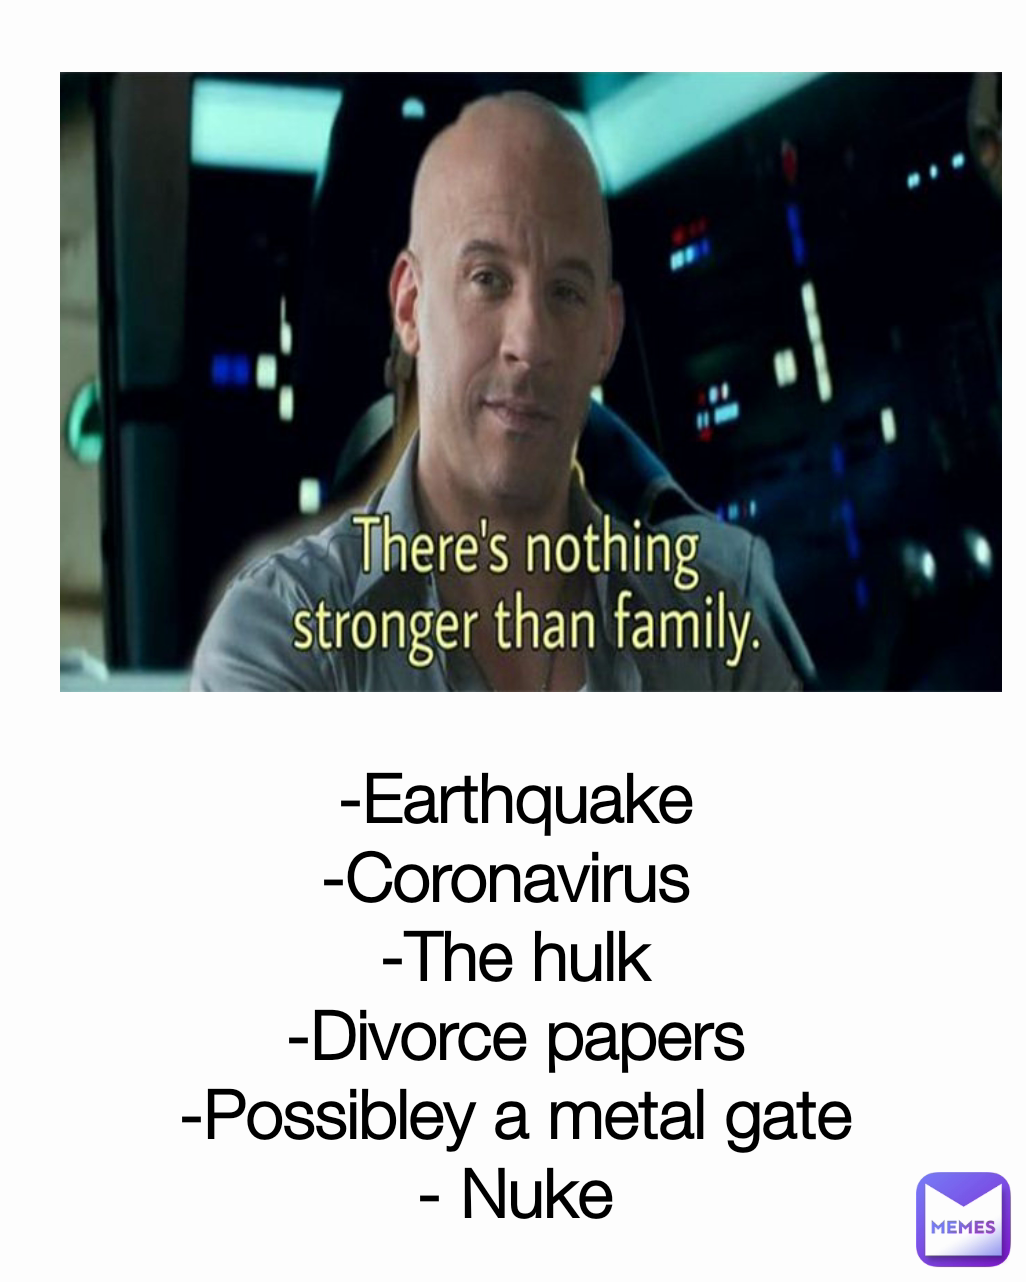 -Earthquake
-Coronavirus 
-The hulk
-Divorce papers
-Possibley a metal gate
- Nuke